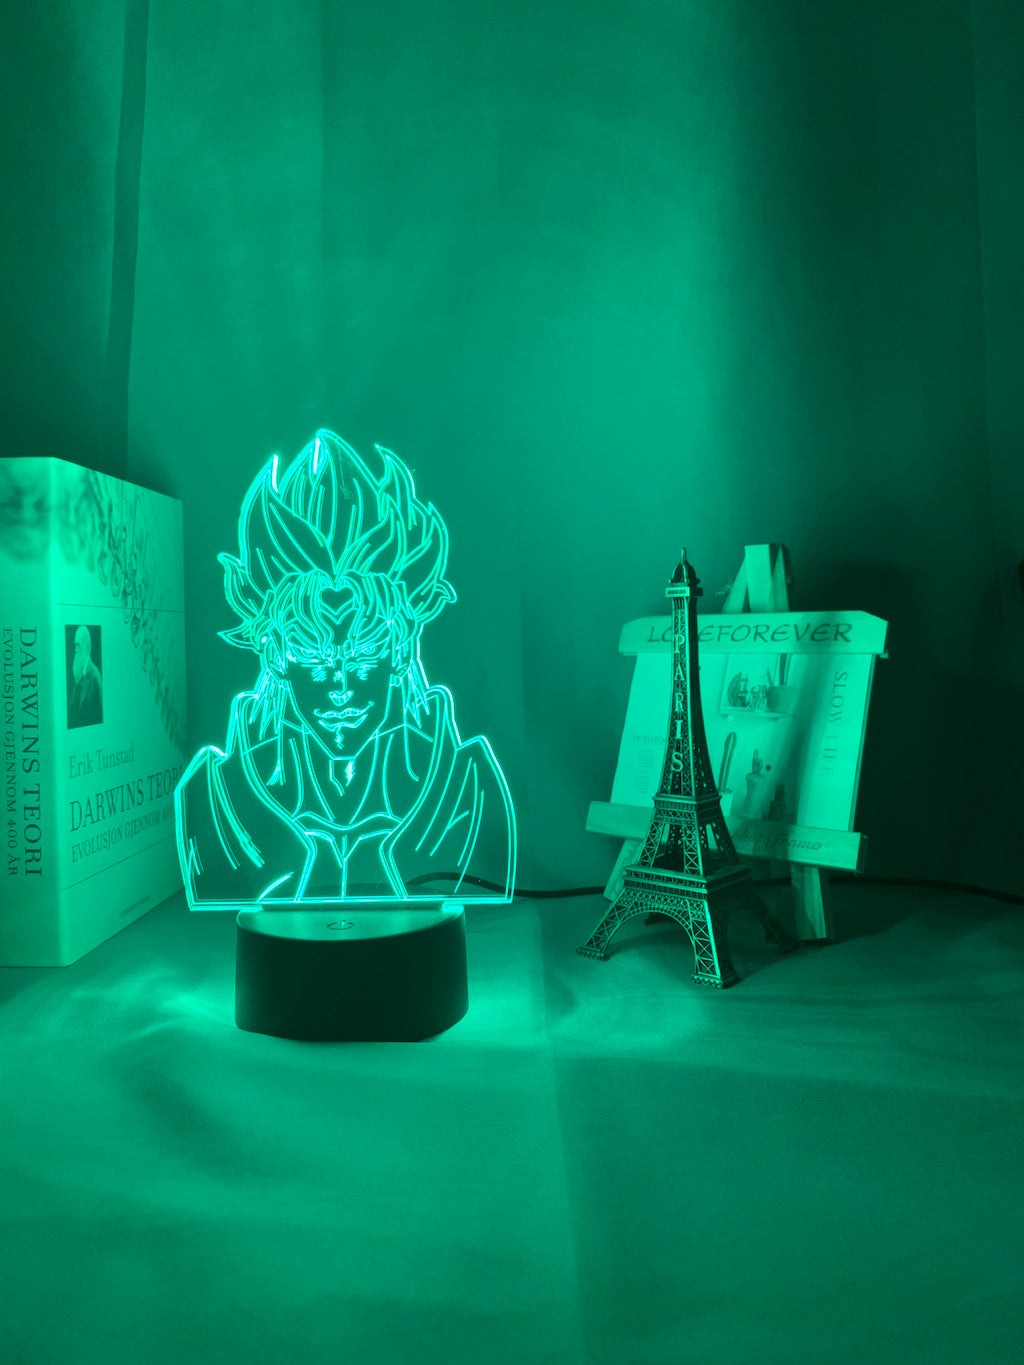 Acrylic Night Lamp Anime JoJo Bizarre Adventure for Bedroom Decor Light Touch Sensor Colorful Table Led Night Light Dio Figure